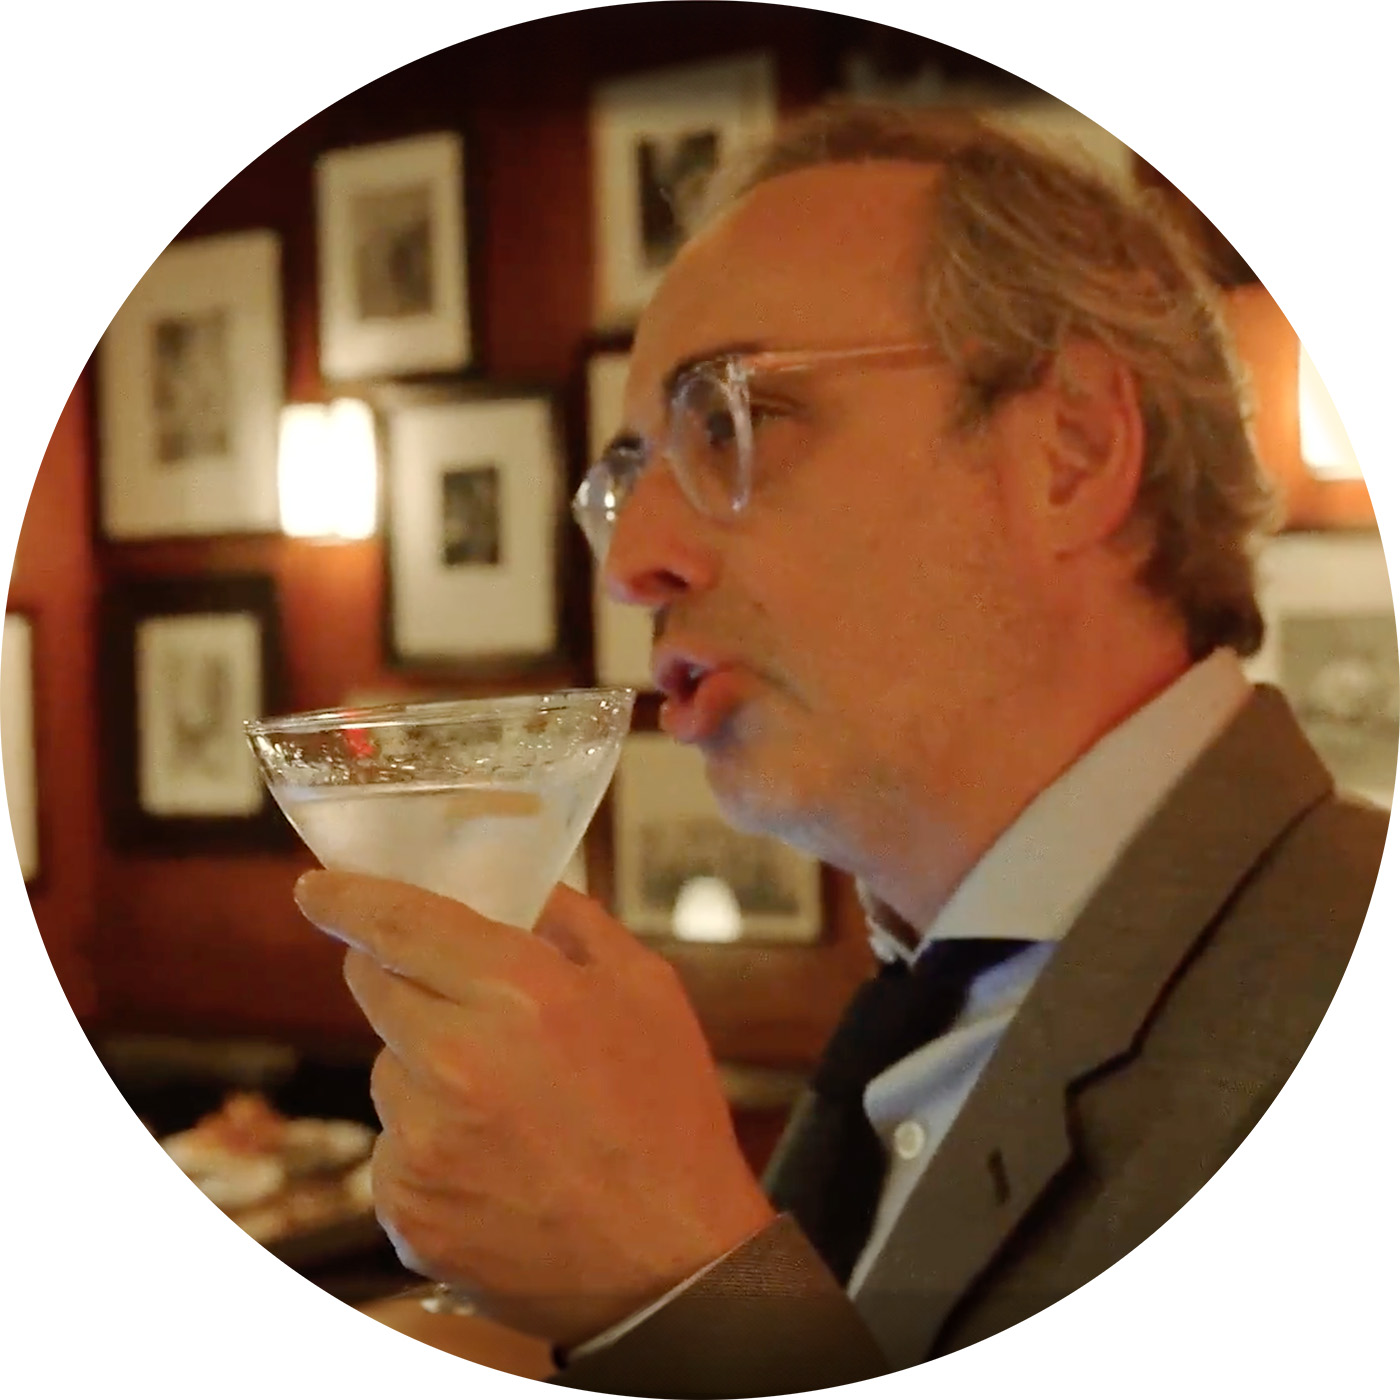 Gary Shteyngart on a wild Martini voyage through NYC